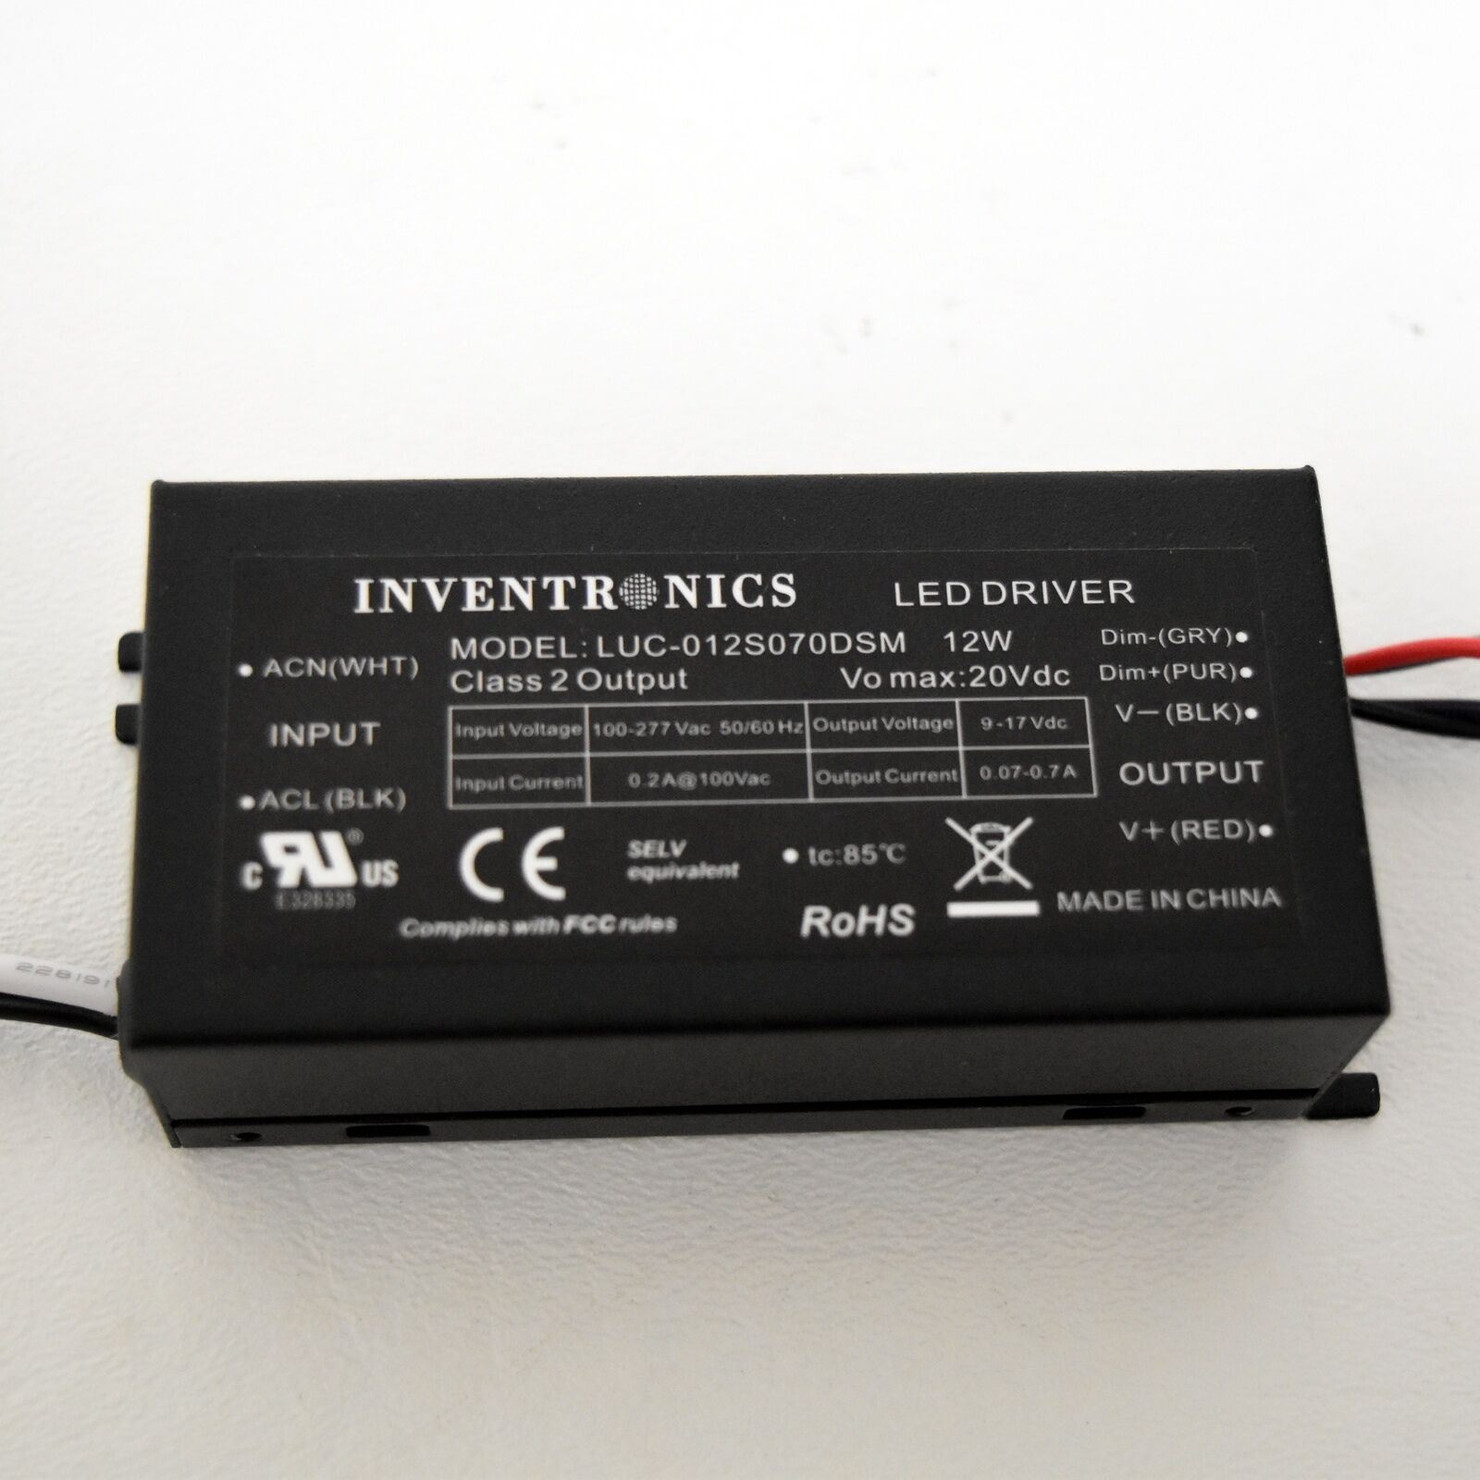 Inventronics LUC-012S070DSM LED Driver 100~277 Vac 50/60 Hz 12W New 